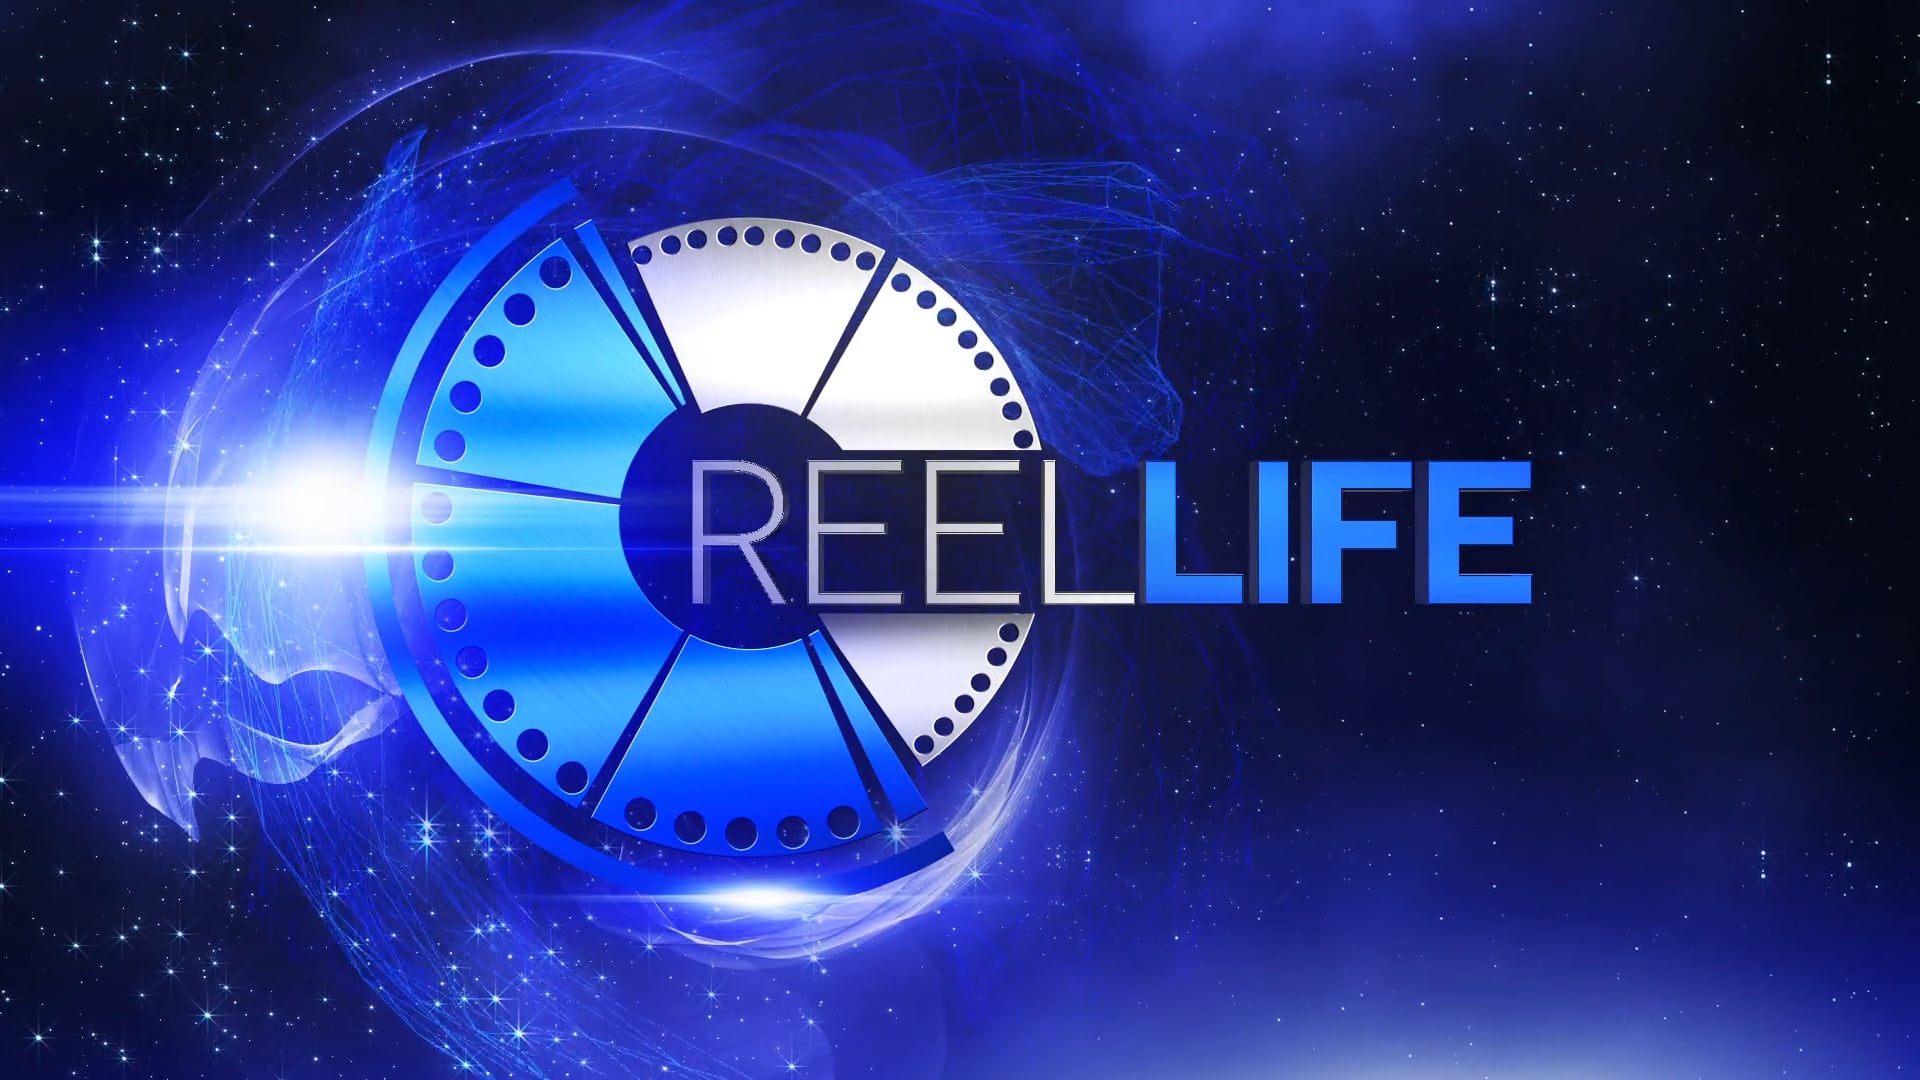 ReelLife- 2019 Rebrand